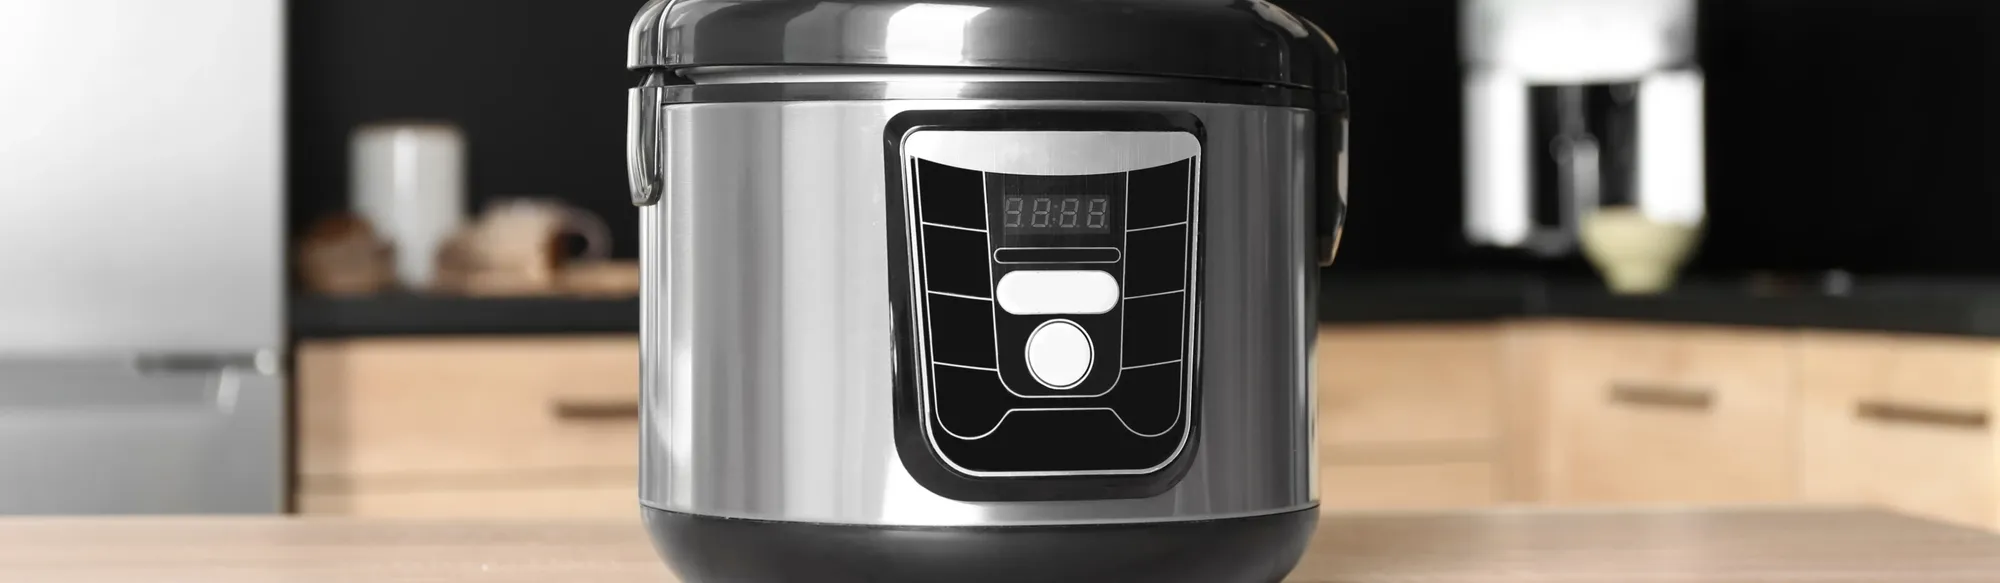 Panela de Pressão Elétrica Mondial Digital Master Cooker PE-41